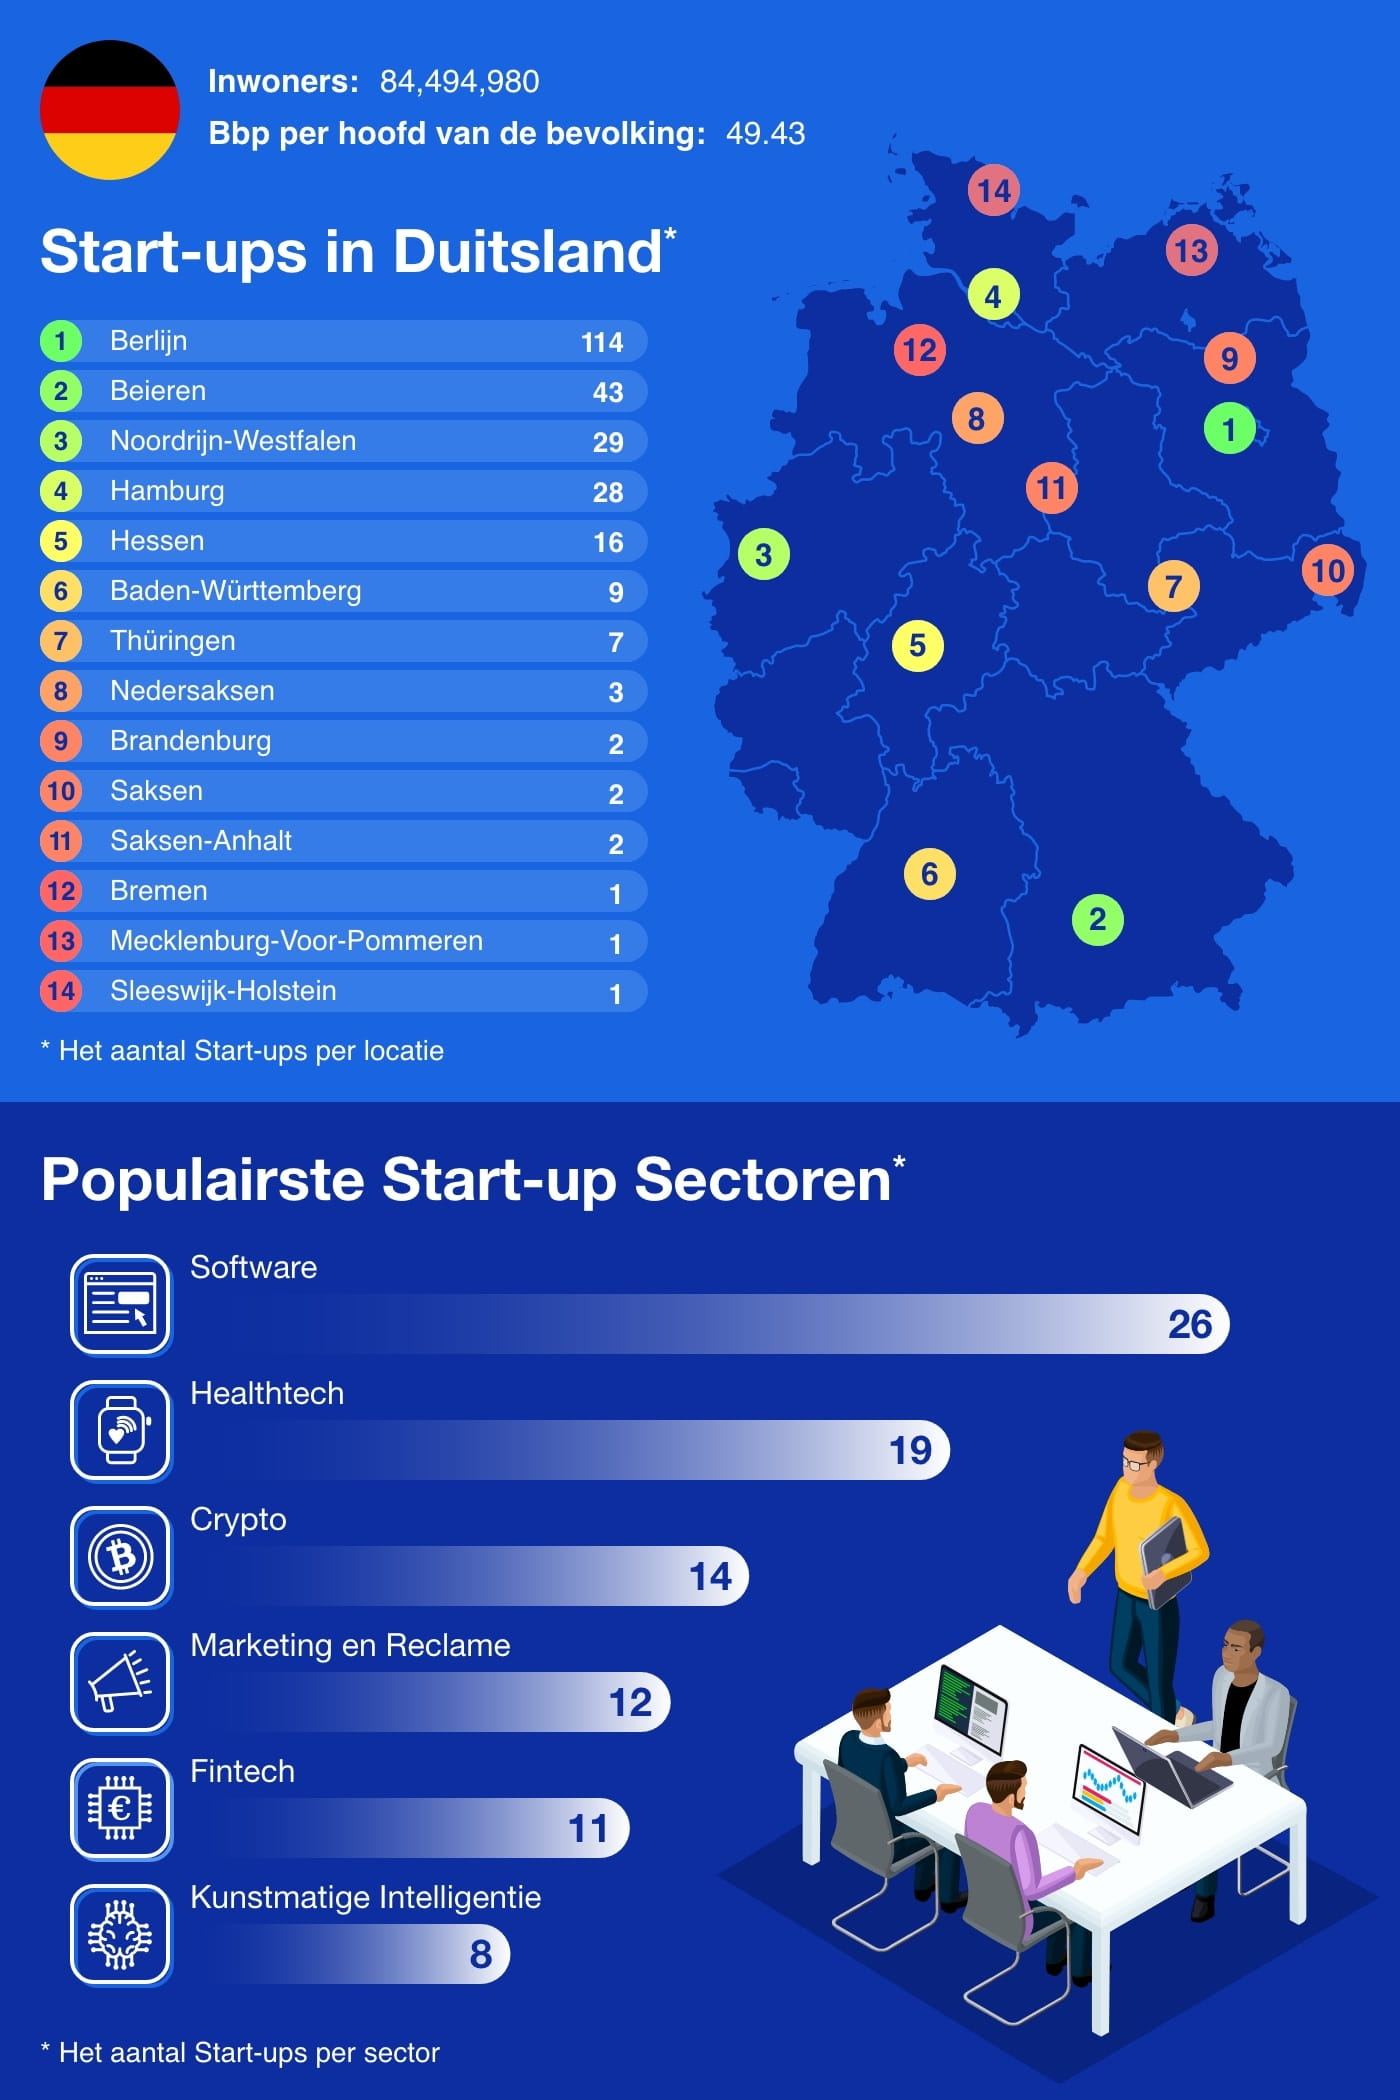 Germany - European Startup Hubs